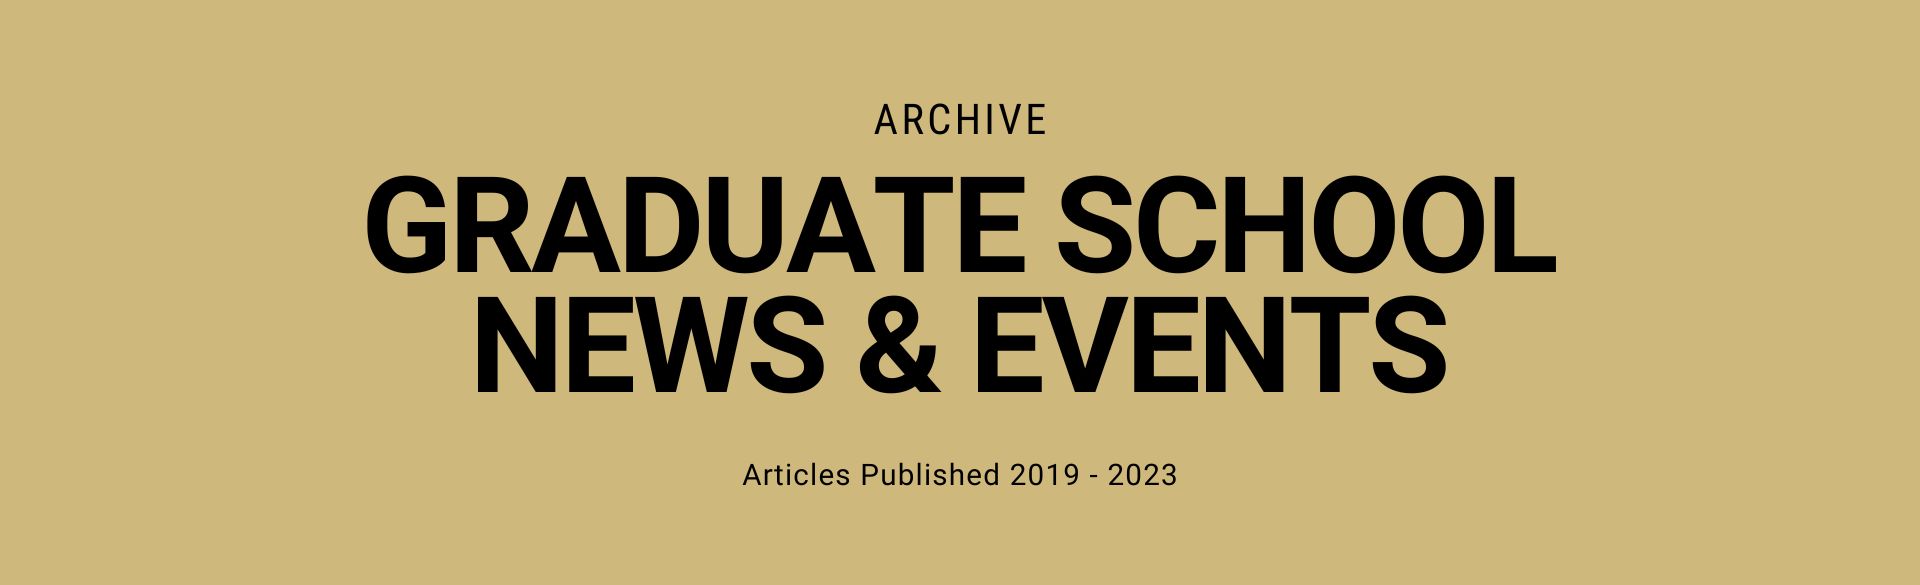 Archive Graduate School News & Events Published 2019 - 2023